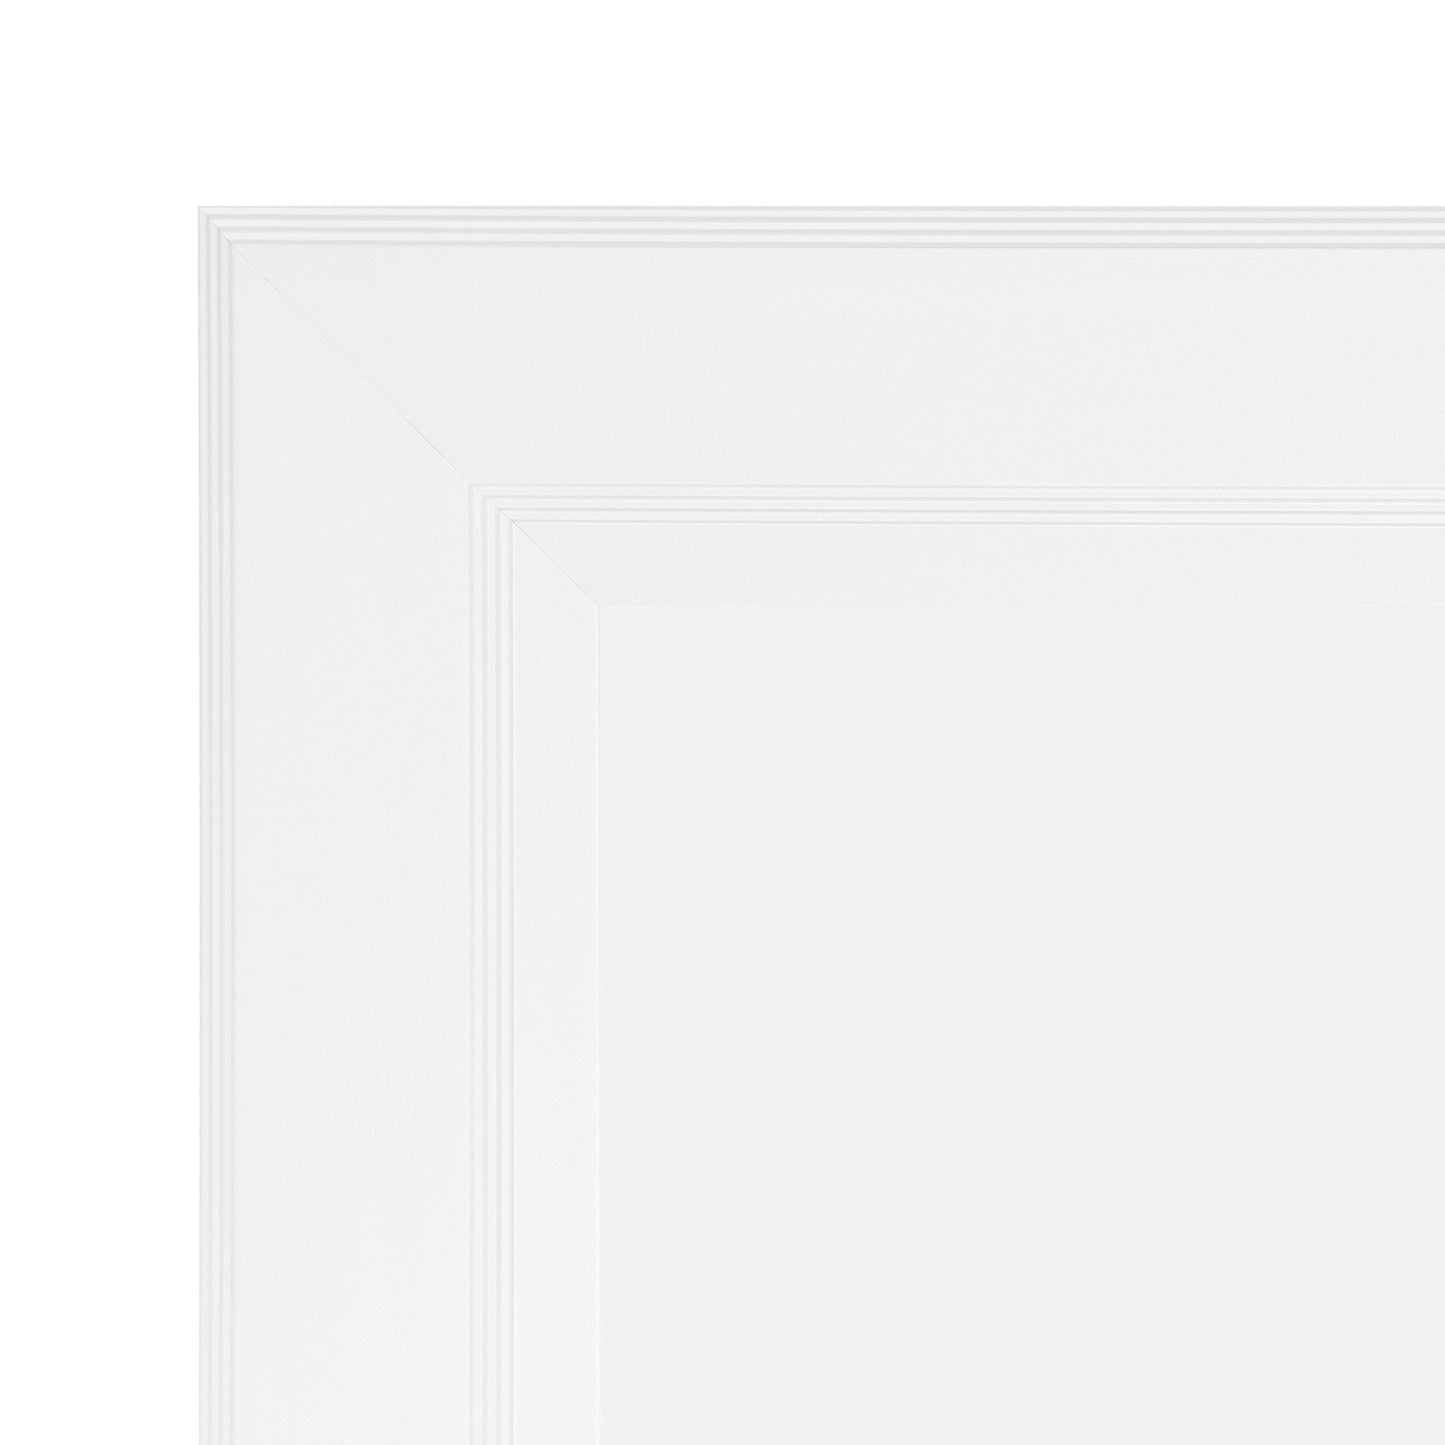 27x40 White SnapeZo® Poster Case - 1.77" Profile - Snap Frames Direct